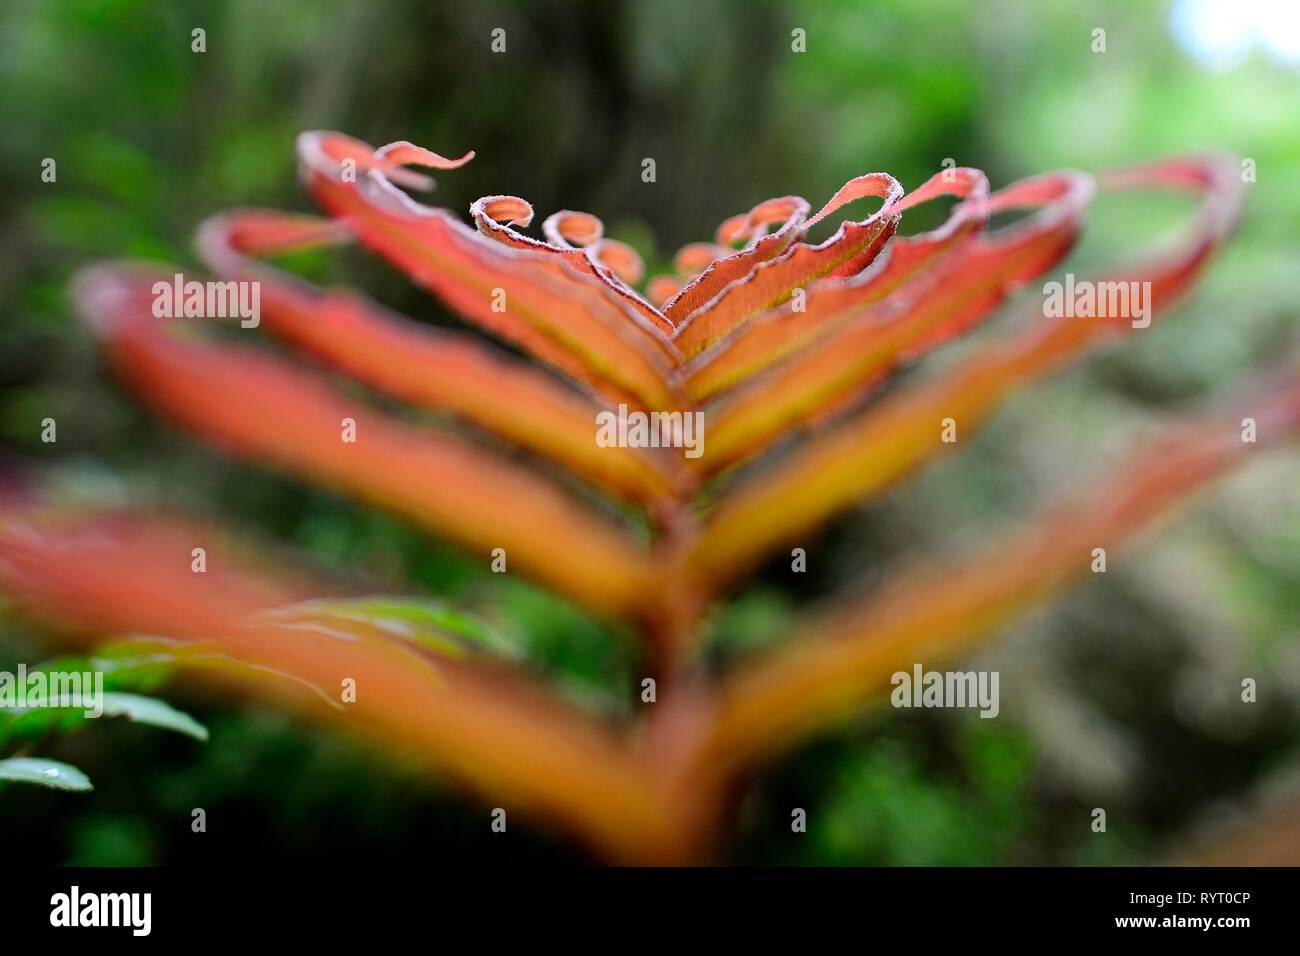 Red leaf, fern (Tracheophyta), close-up, temperate rainforest, Parque Pumalin, province of Palena, Región de los Lagos, Chile Stock Photo